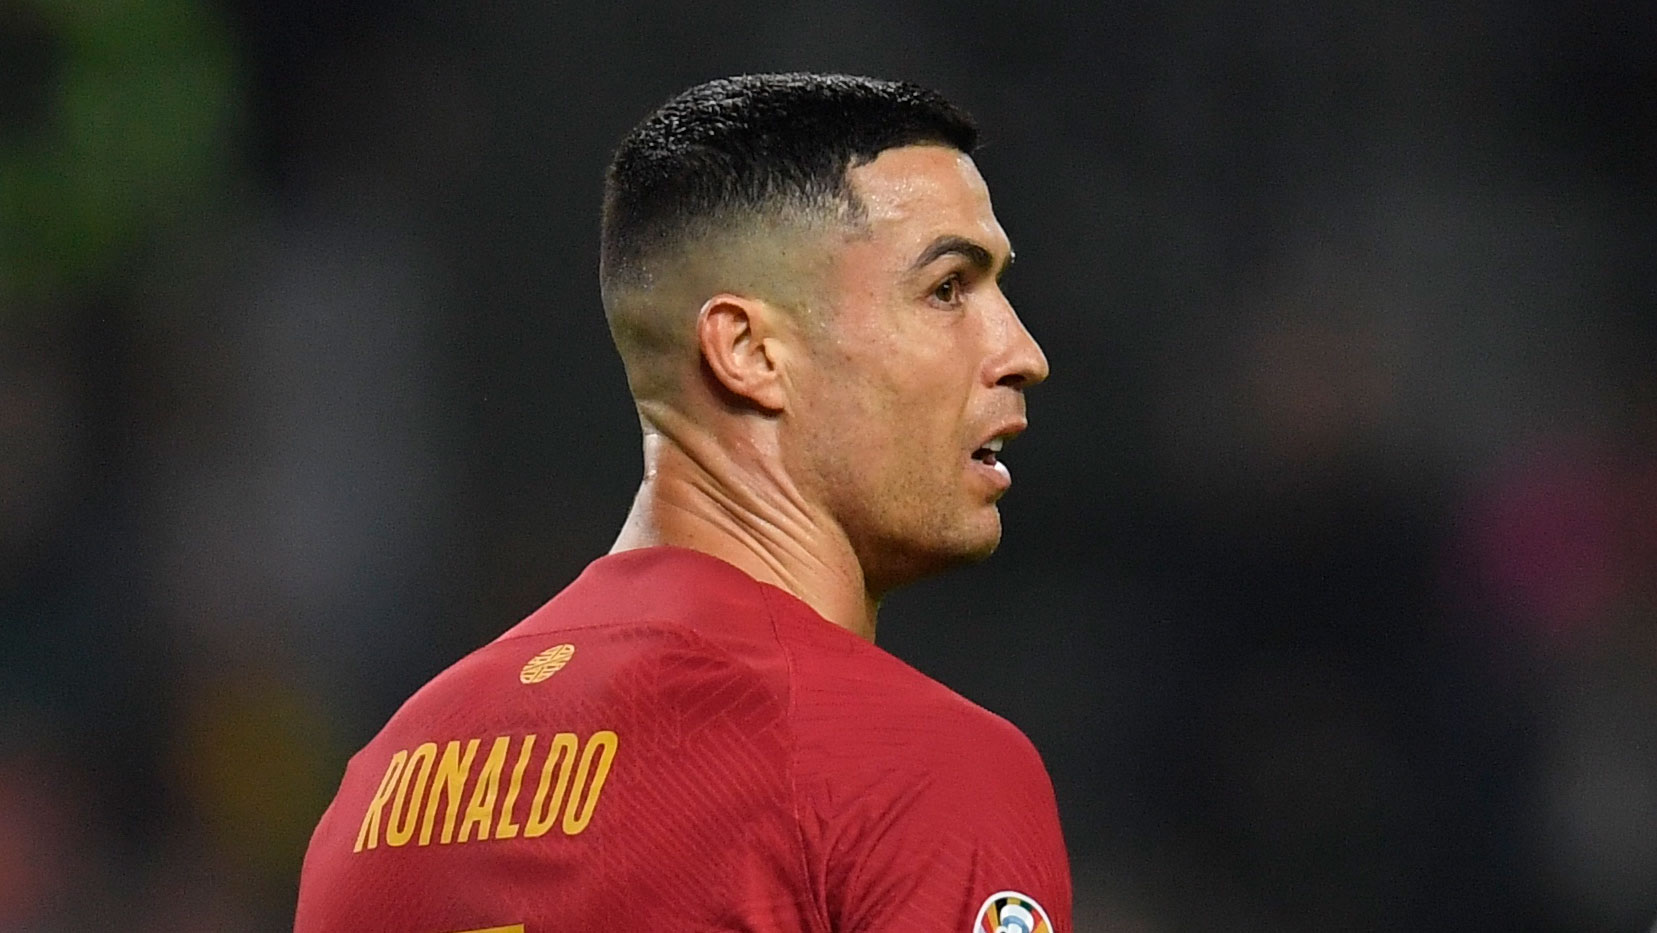 Cristiano Ronaldo Hairstyles-20 Most Popular Hair Cuts Pics | Cristiano  ronaldo hairstyle, Ronaldo hair, Christiano ronaldo haircut